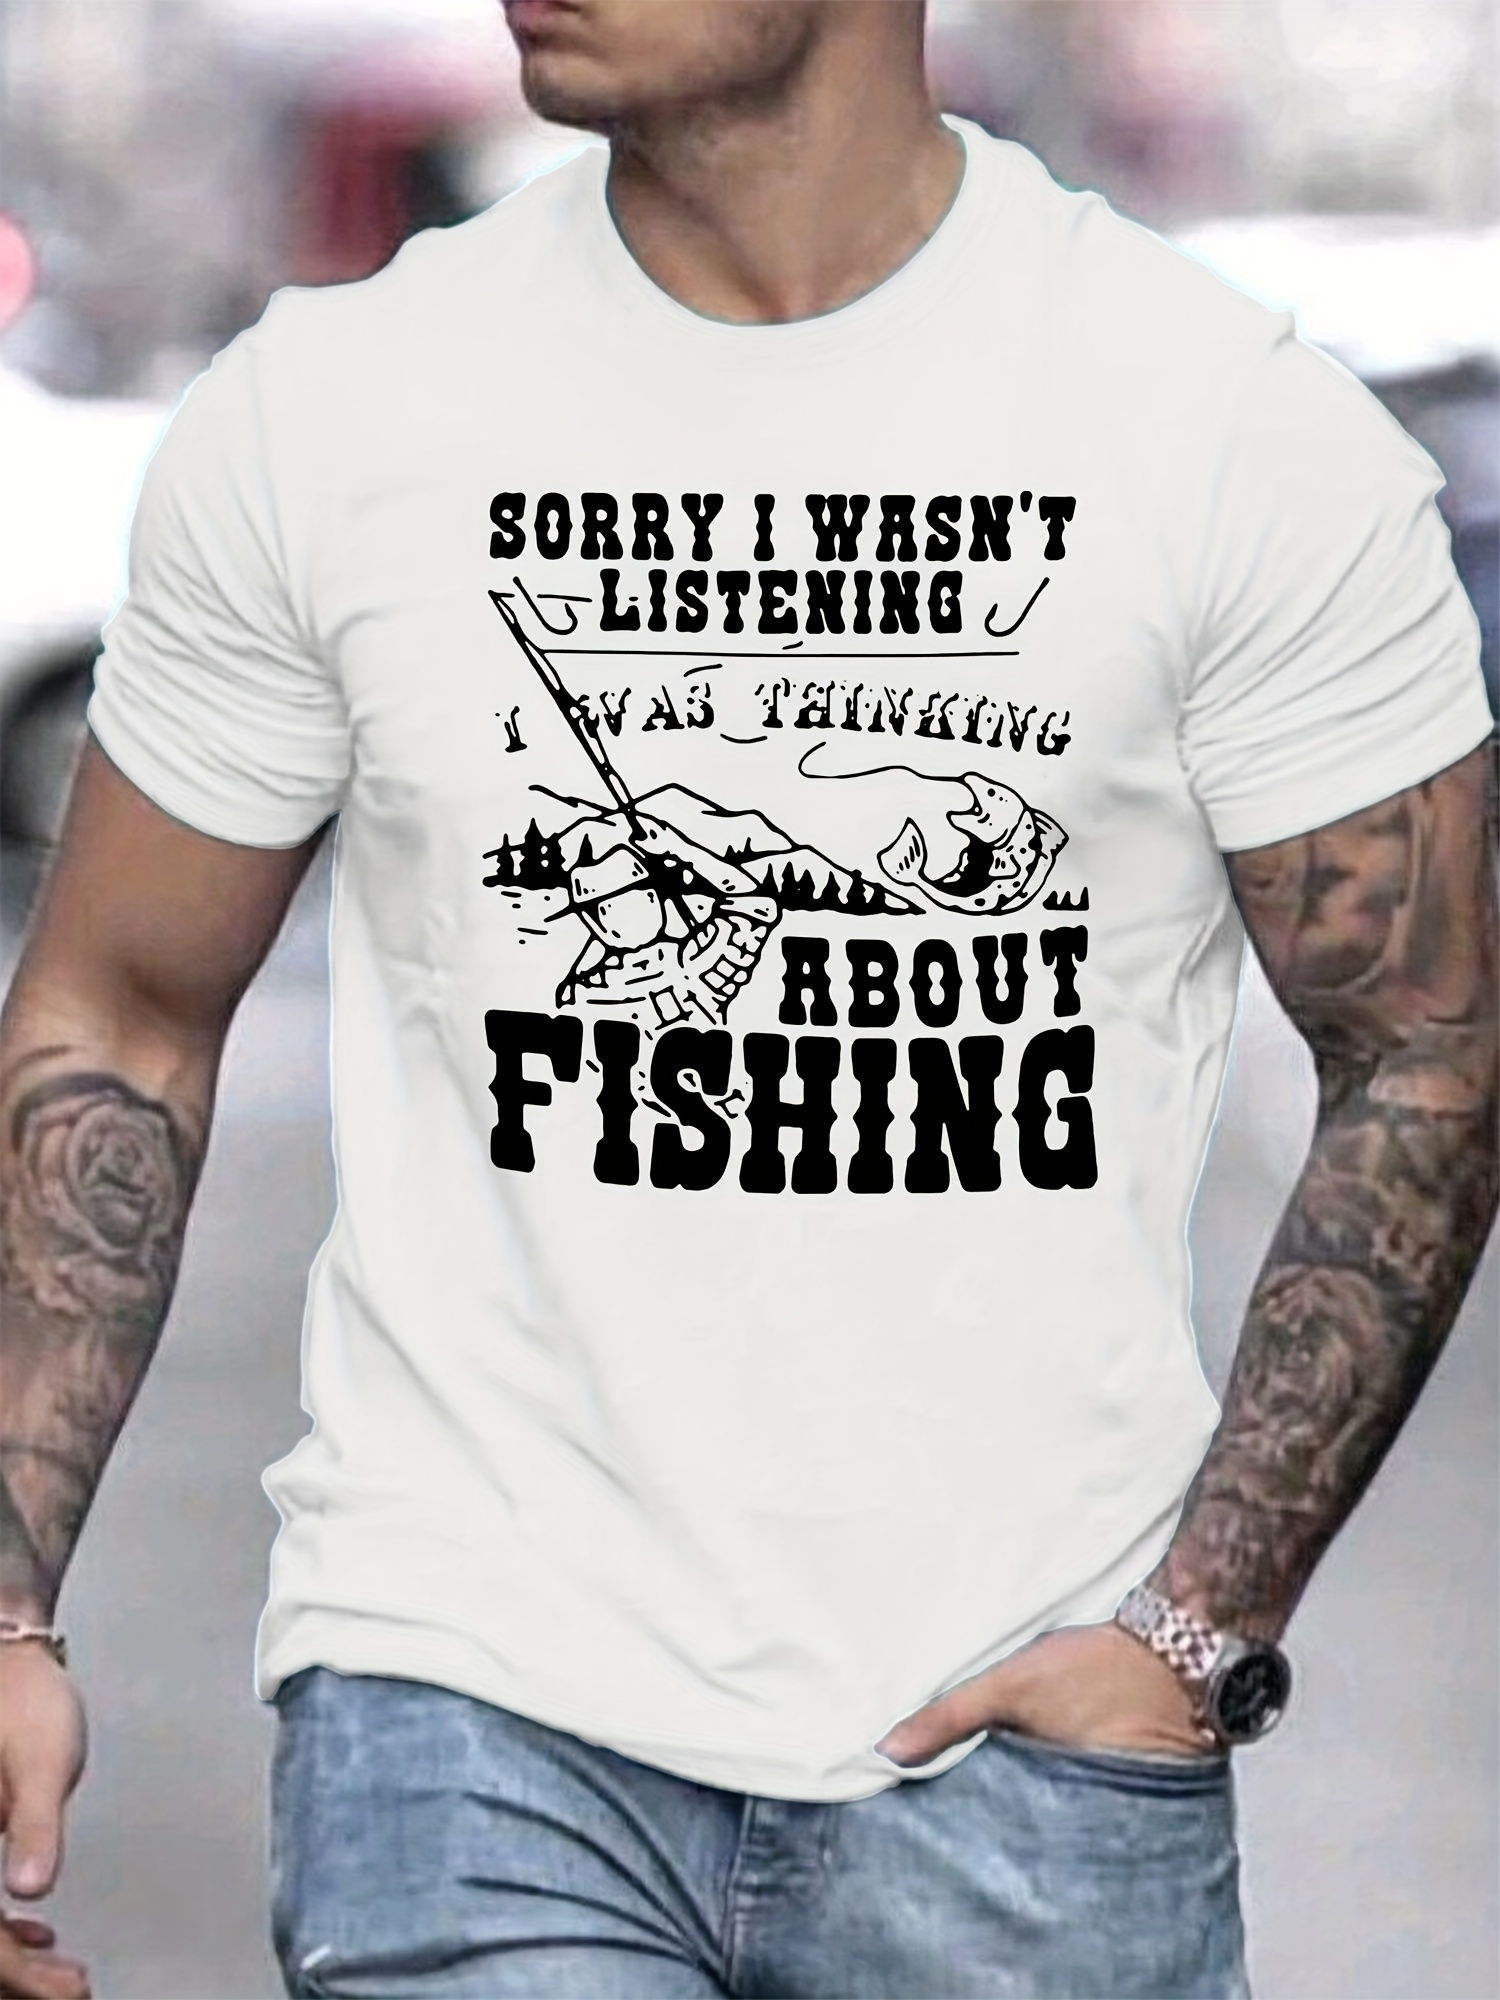 Funny Fishing & Slogan Pattern Print Graphic T-Shirts, Causal Tees, Short Sleeves Comfortable Pullover Tops, Men's Summer Clothing